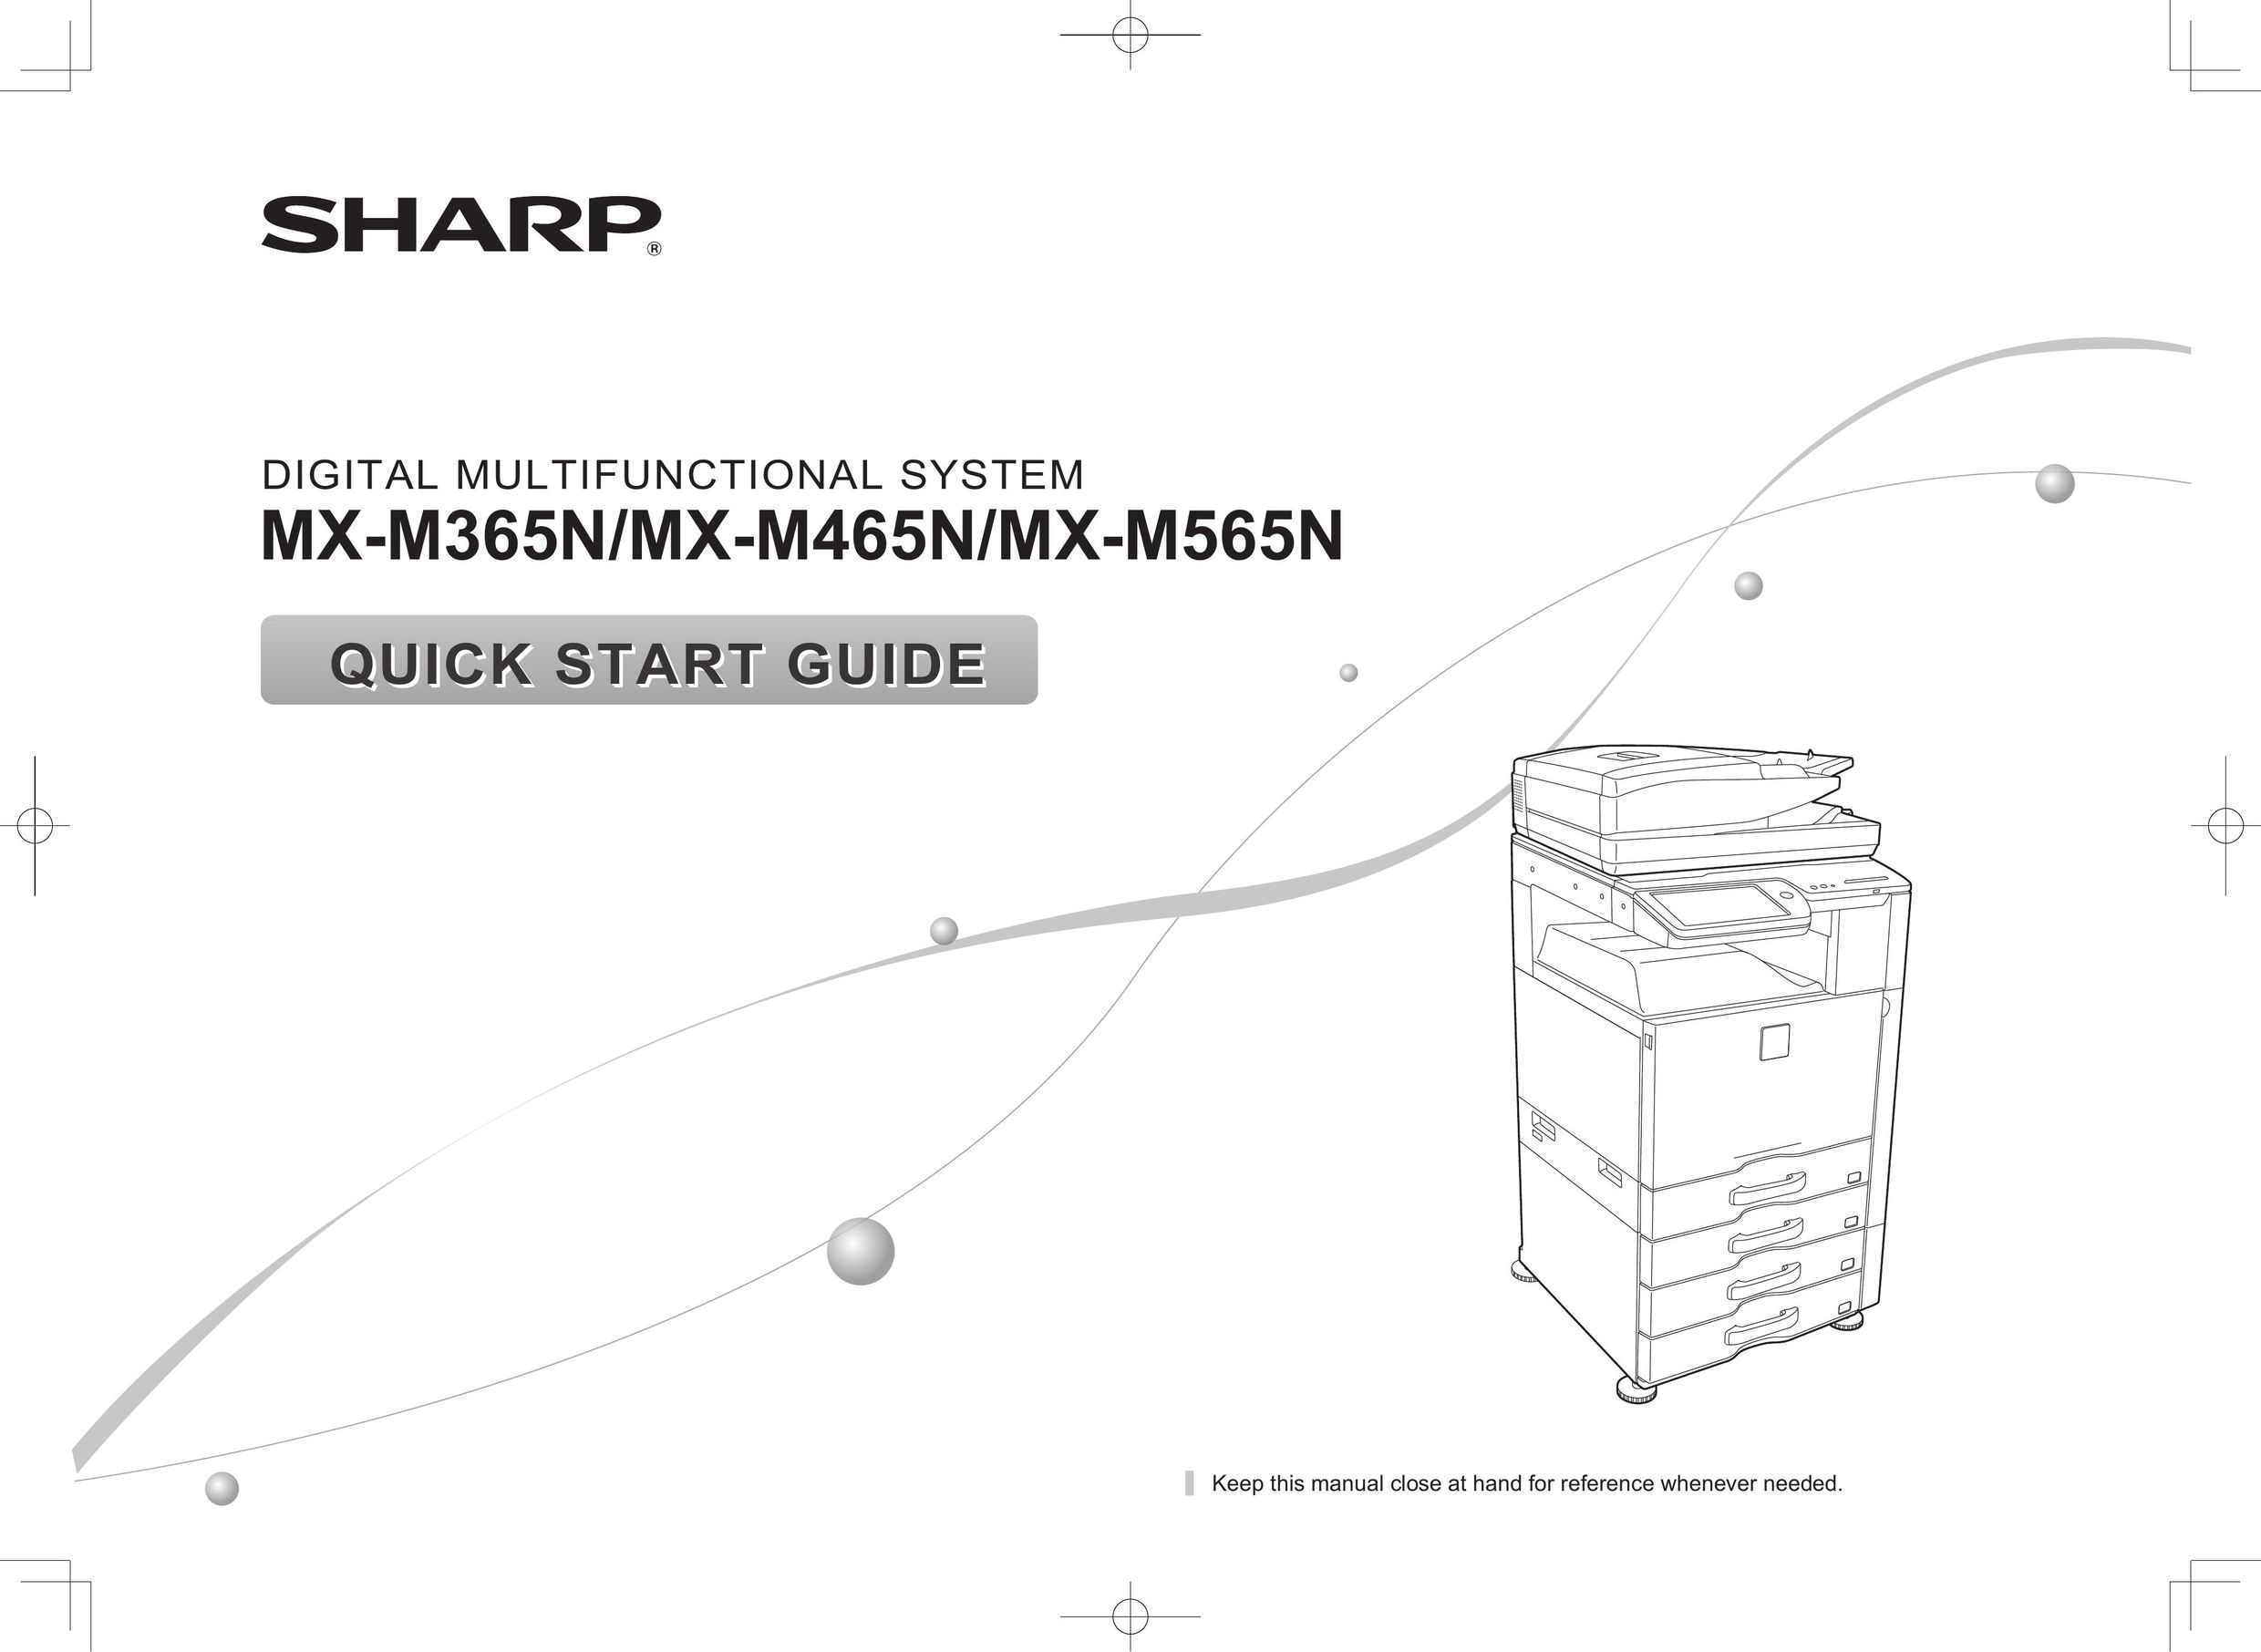 Sharp MX-M565N Fax Machine User Manual